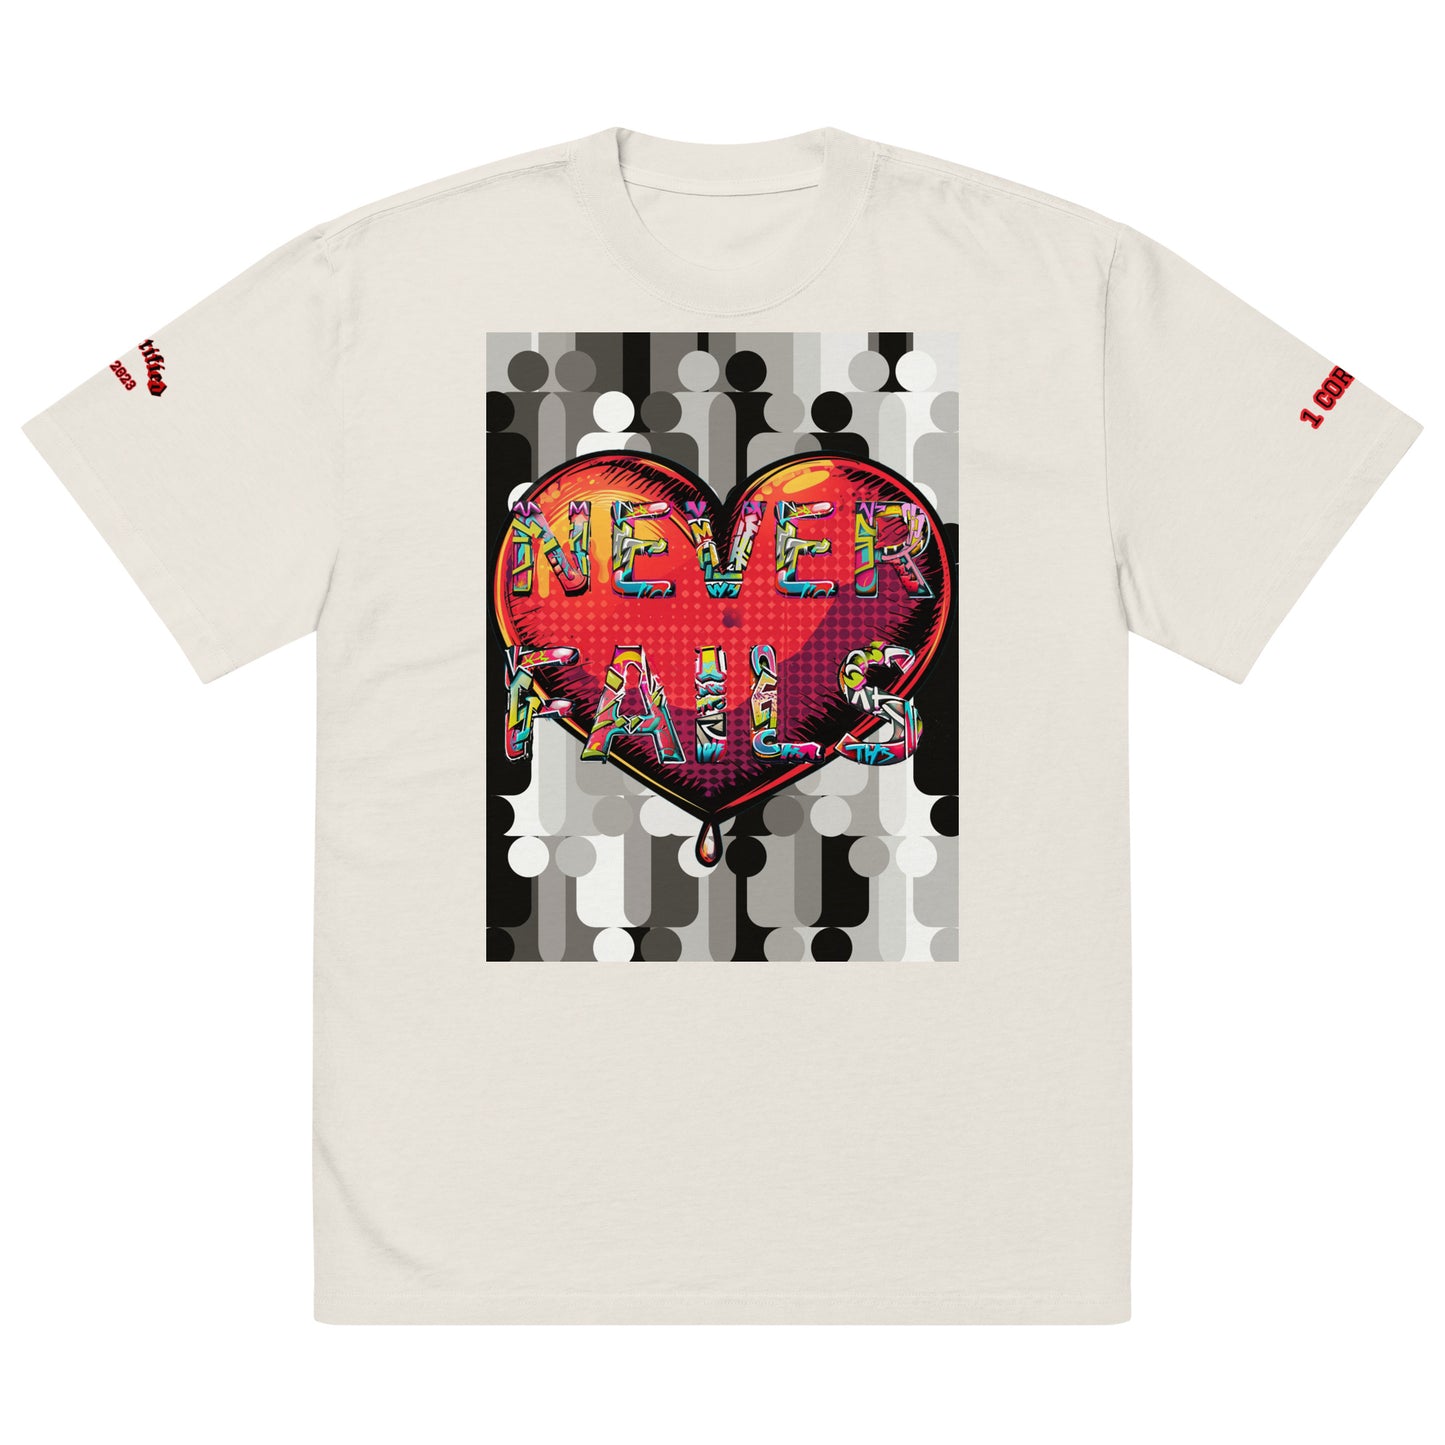 LOVE NEVER FAILS- Oversized faded t-shirt